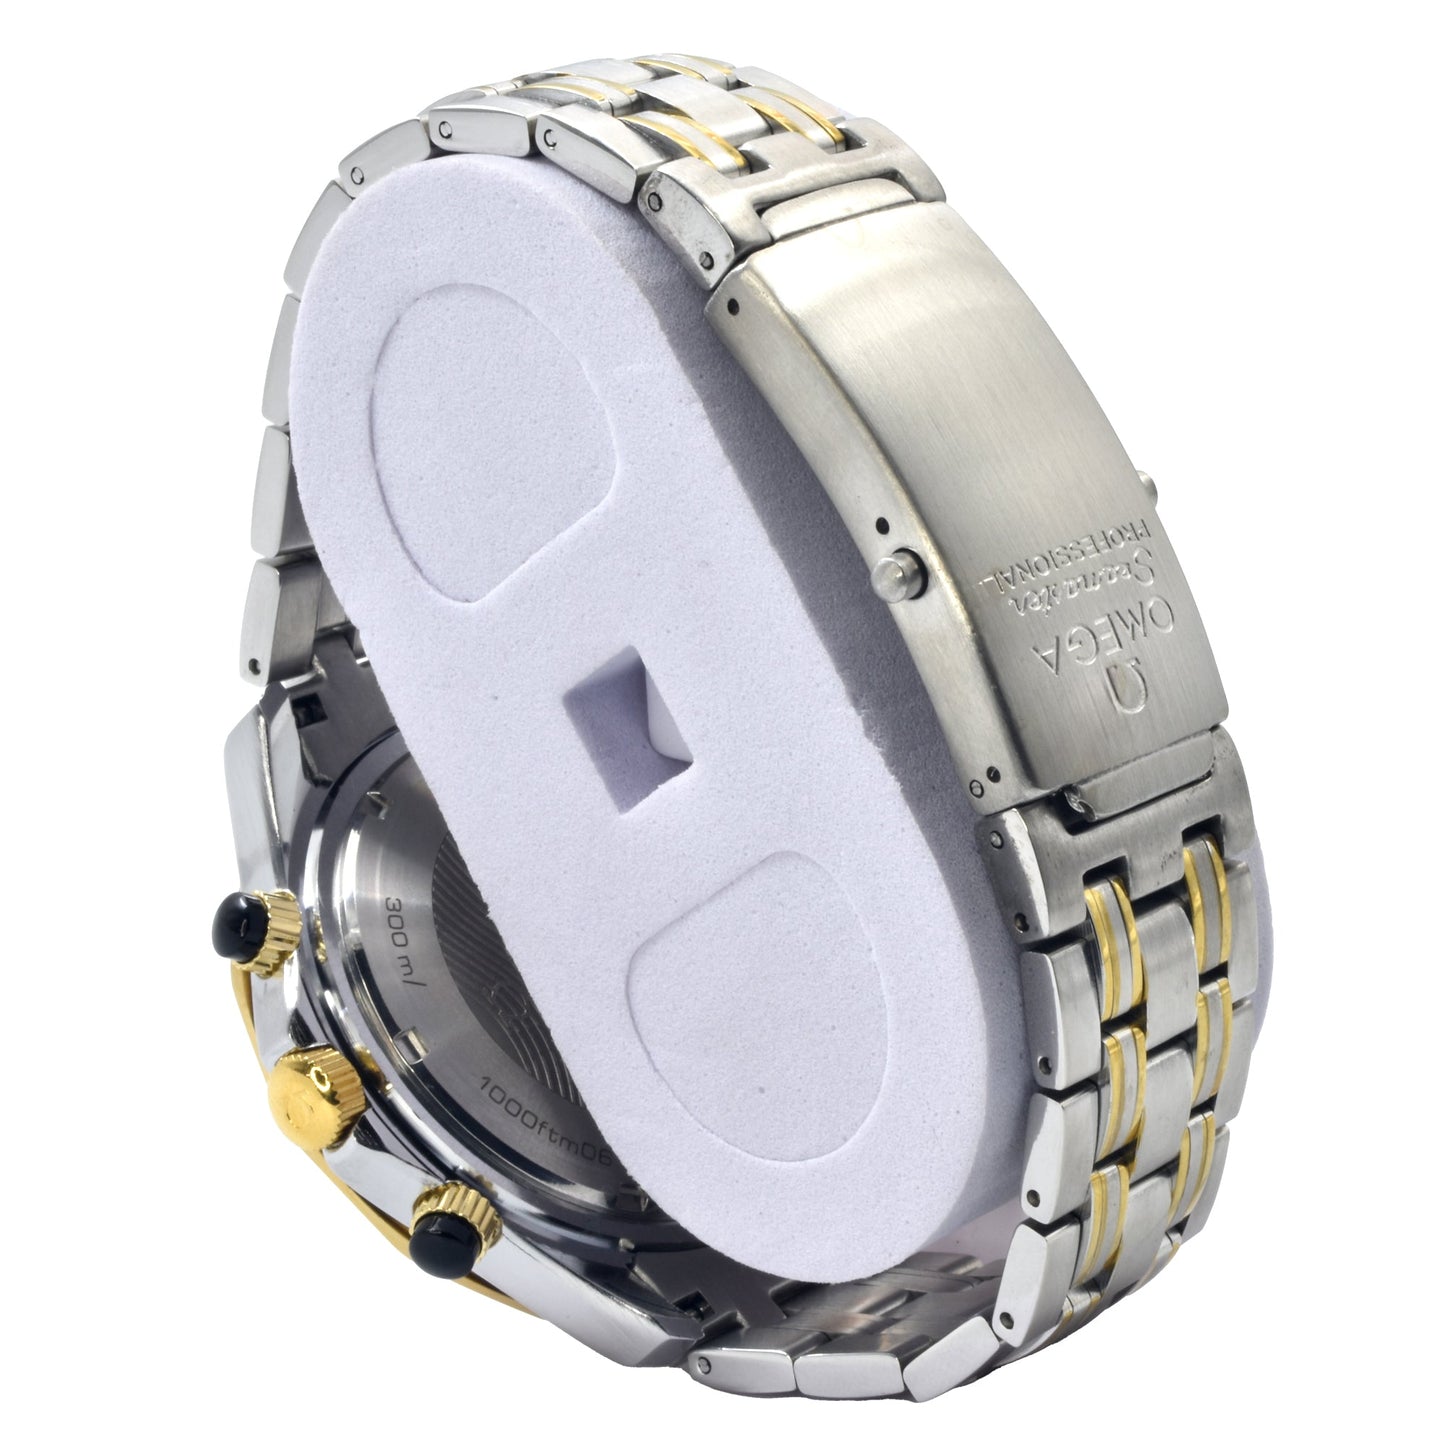 Premium Quality Chronograph Quartz Watch | OMGA Watch 1016